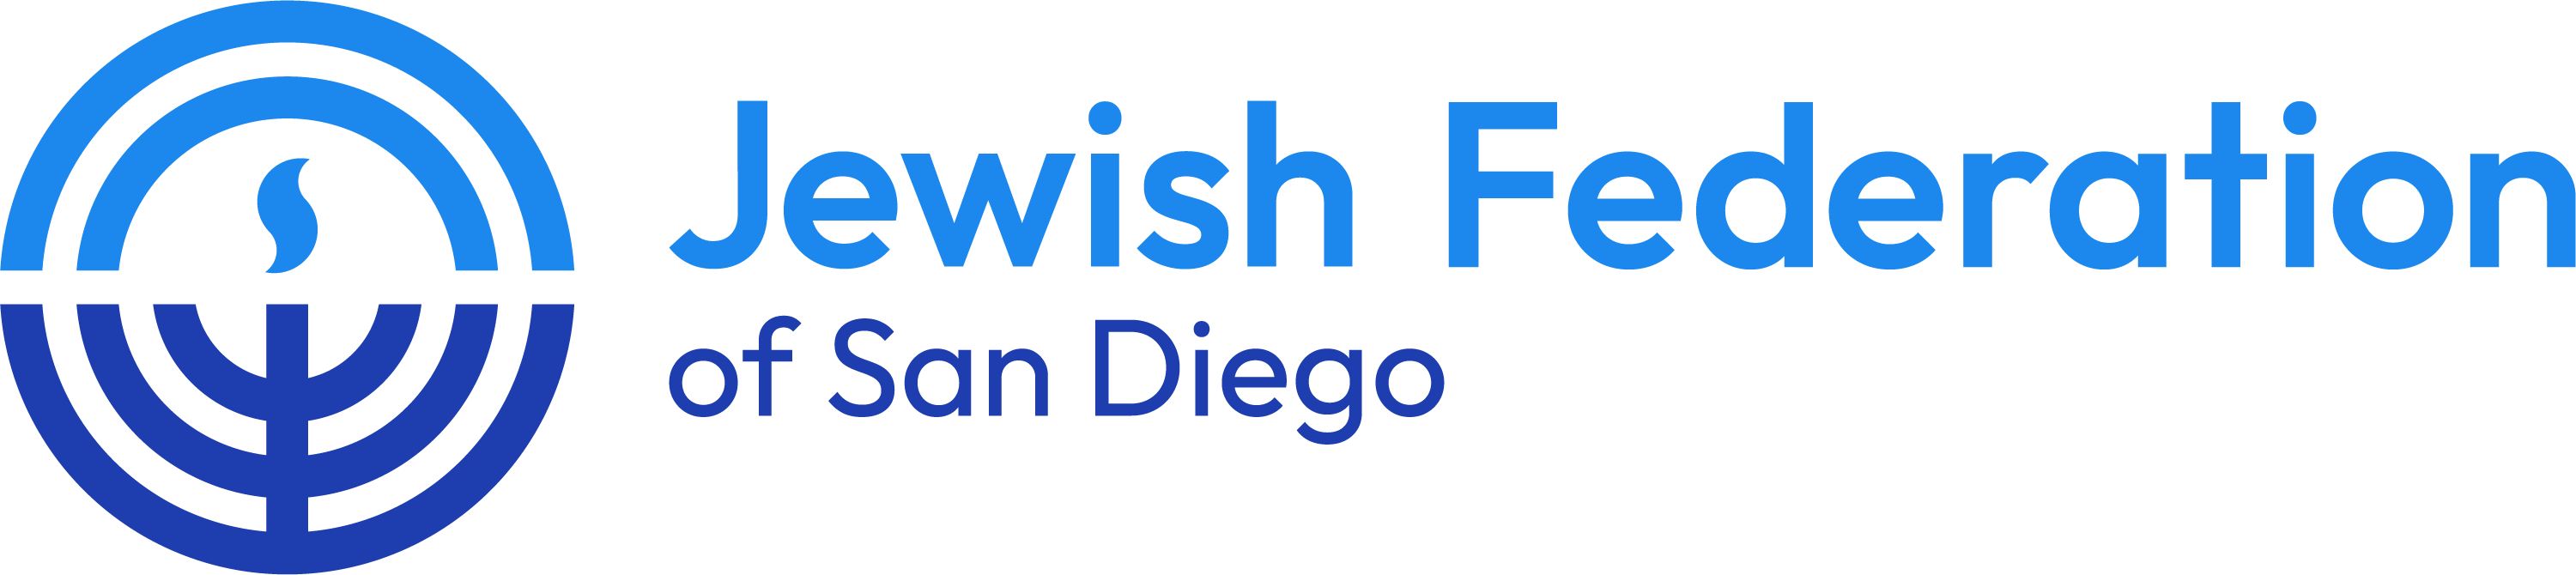 Jewish Federation Of San Diego County